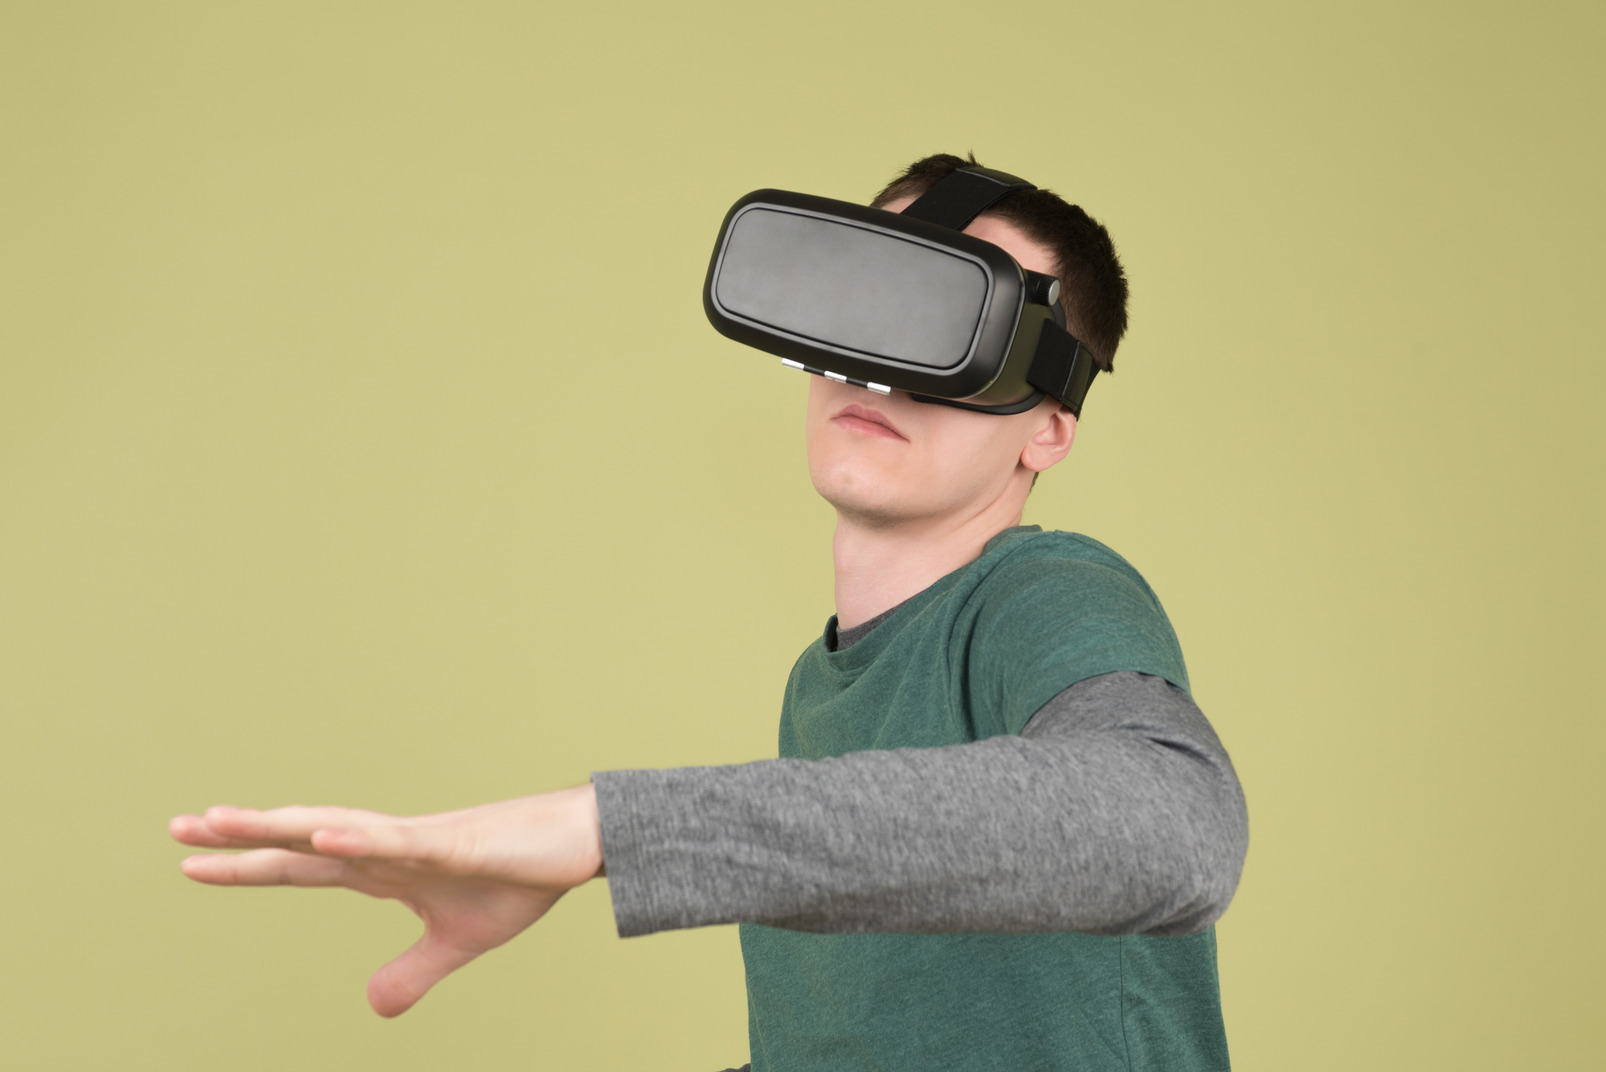 Young man wearing a virtual reality headset